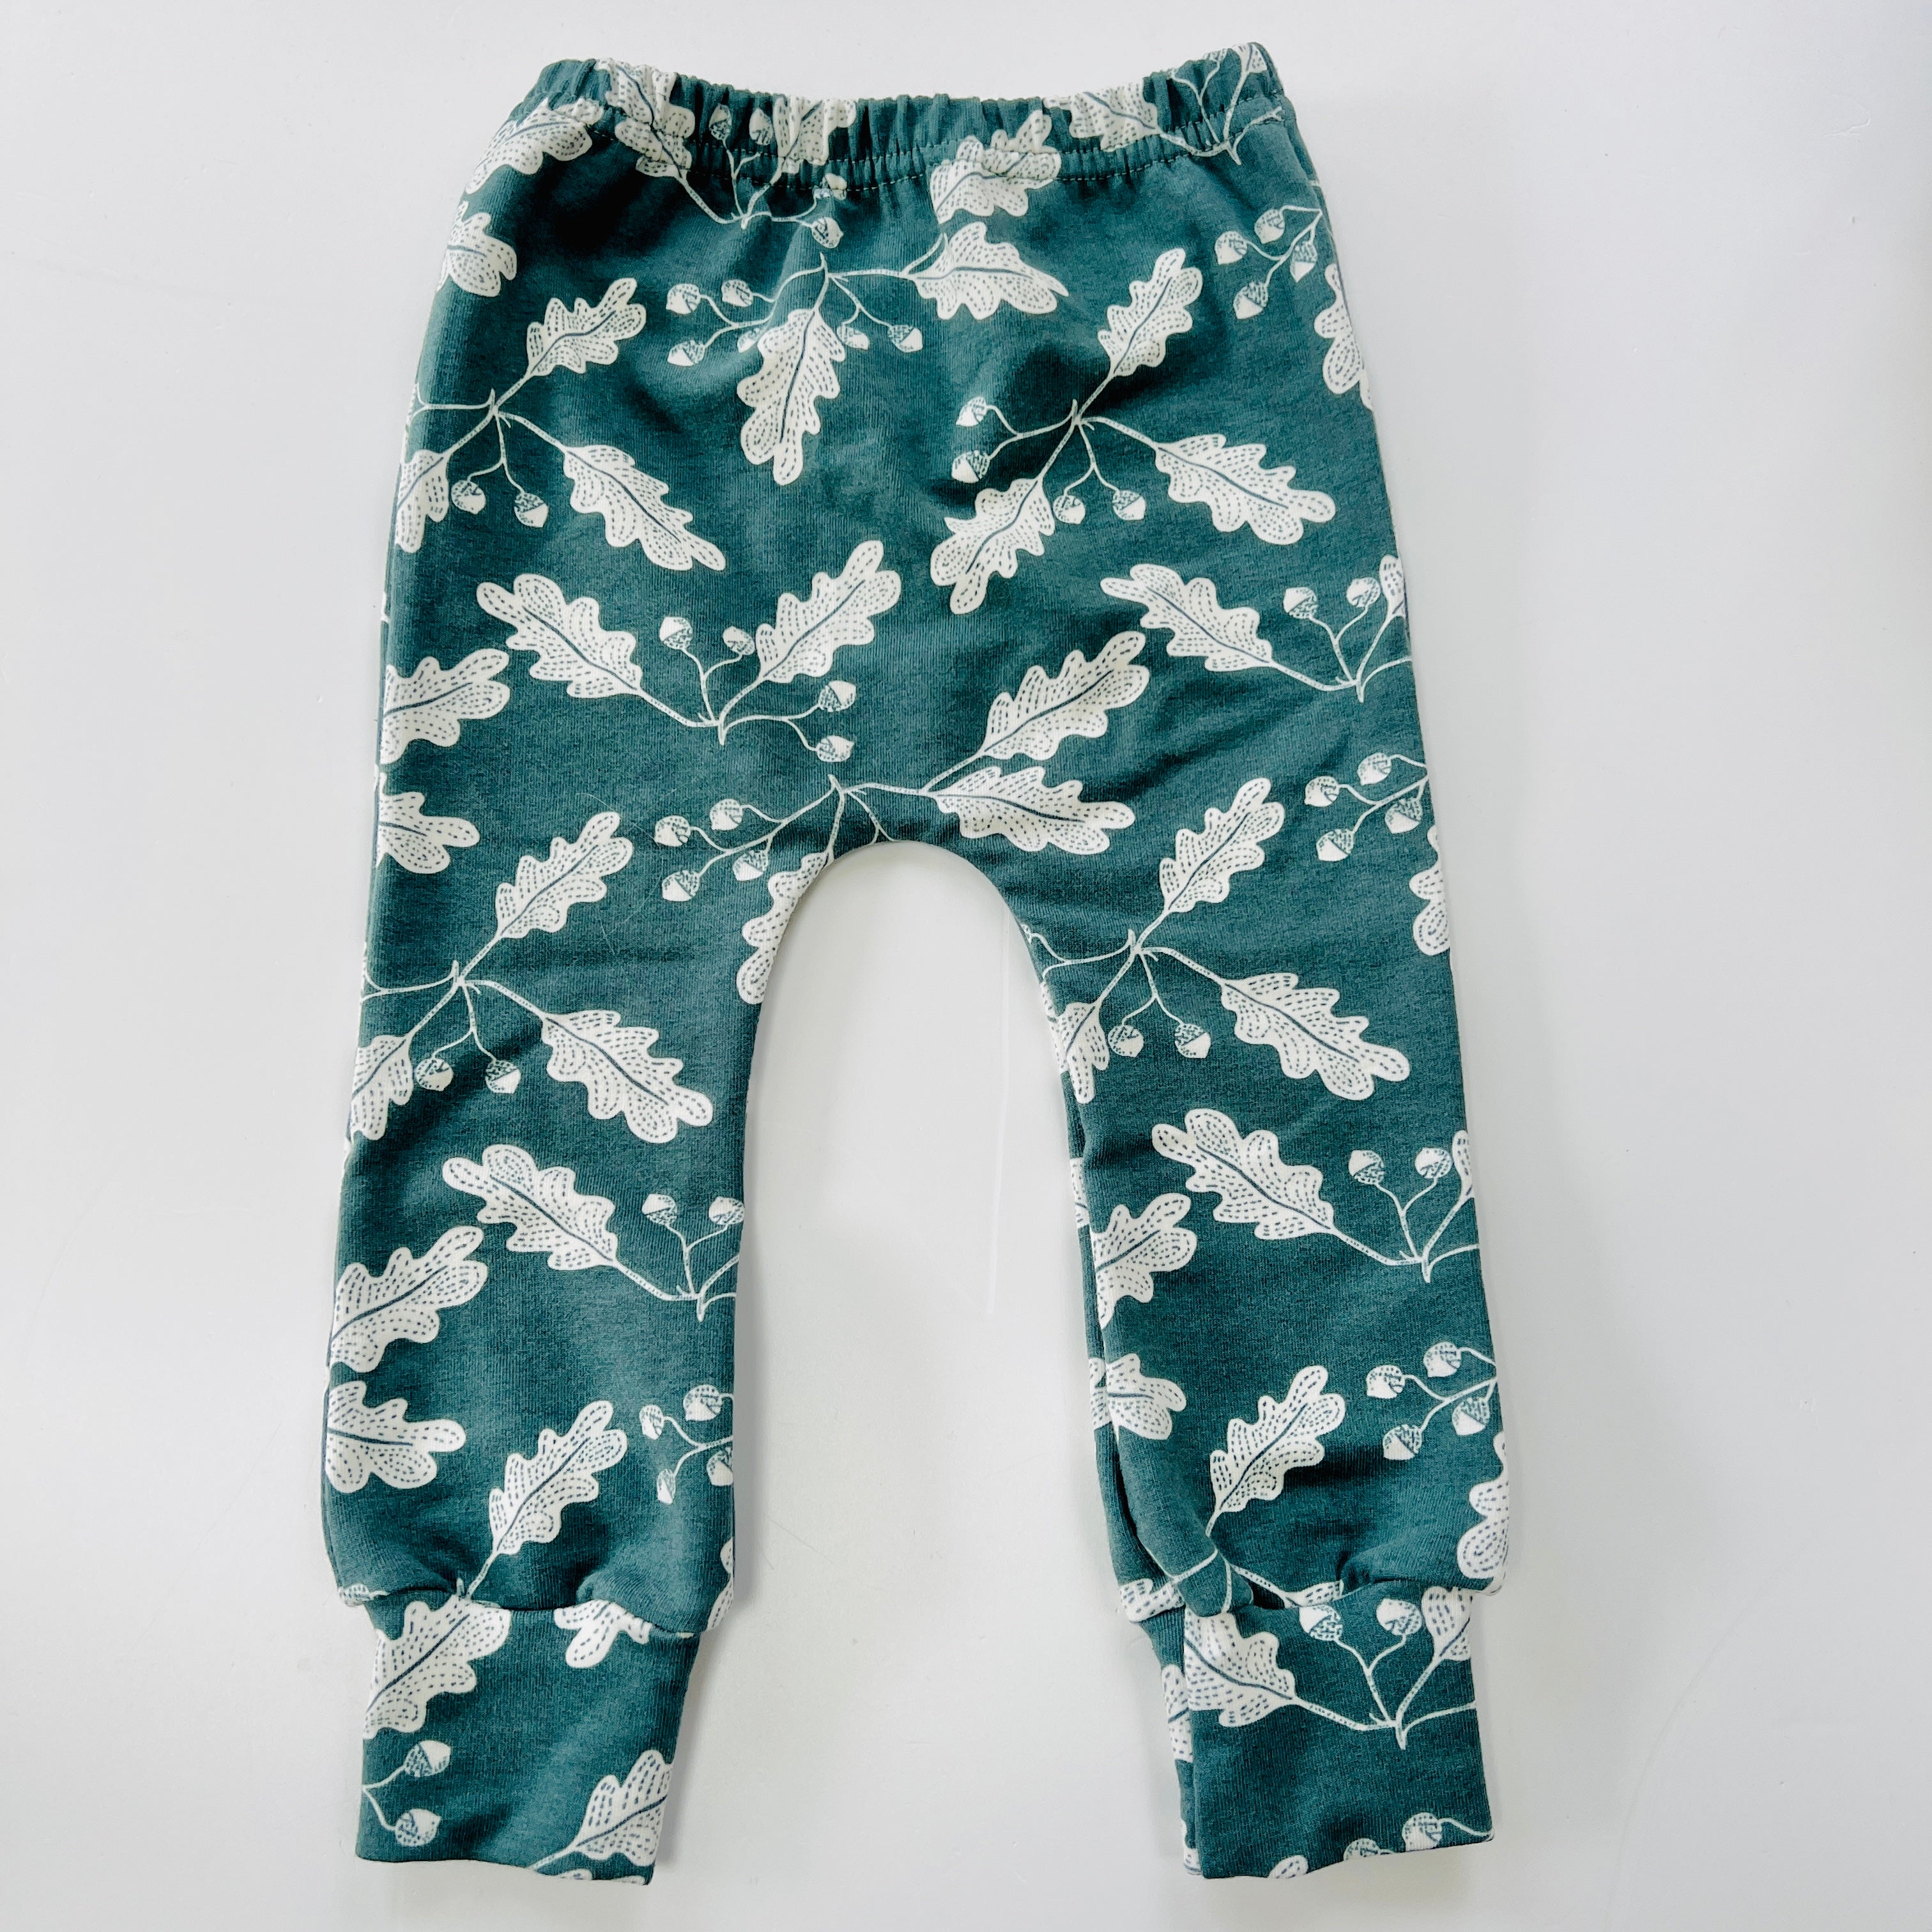 Eddie & Bee organic cotton leggings in Pine "Acorn Leaves" print. (Thicker Jersey Fabric)